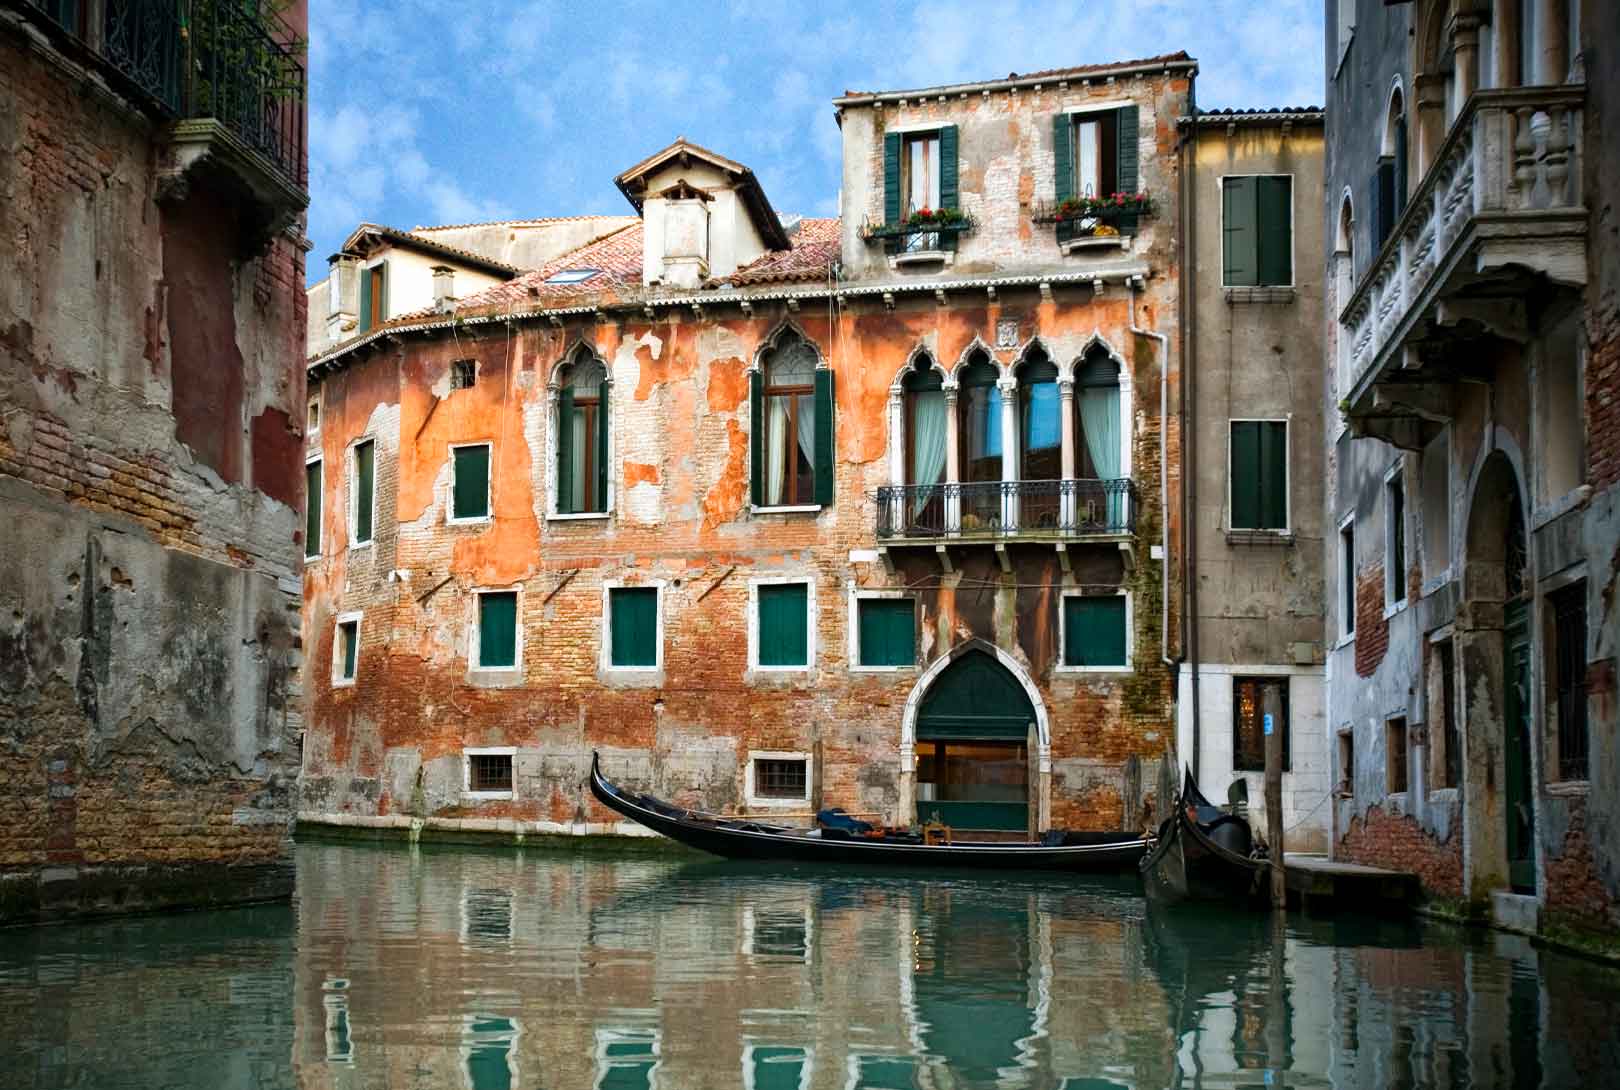 Two Venetian Gondolas Along A Canal In Venice Italy